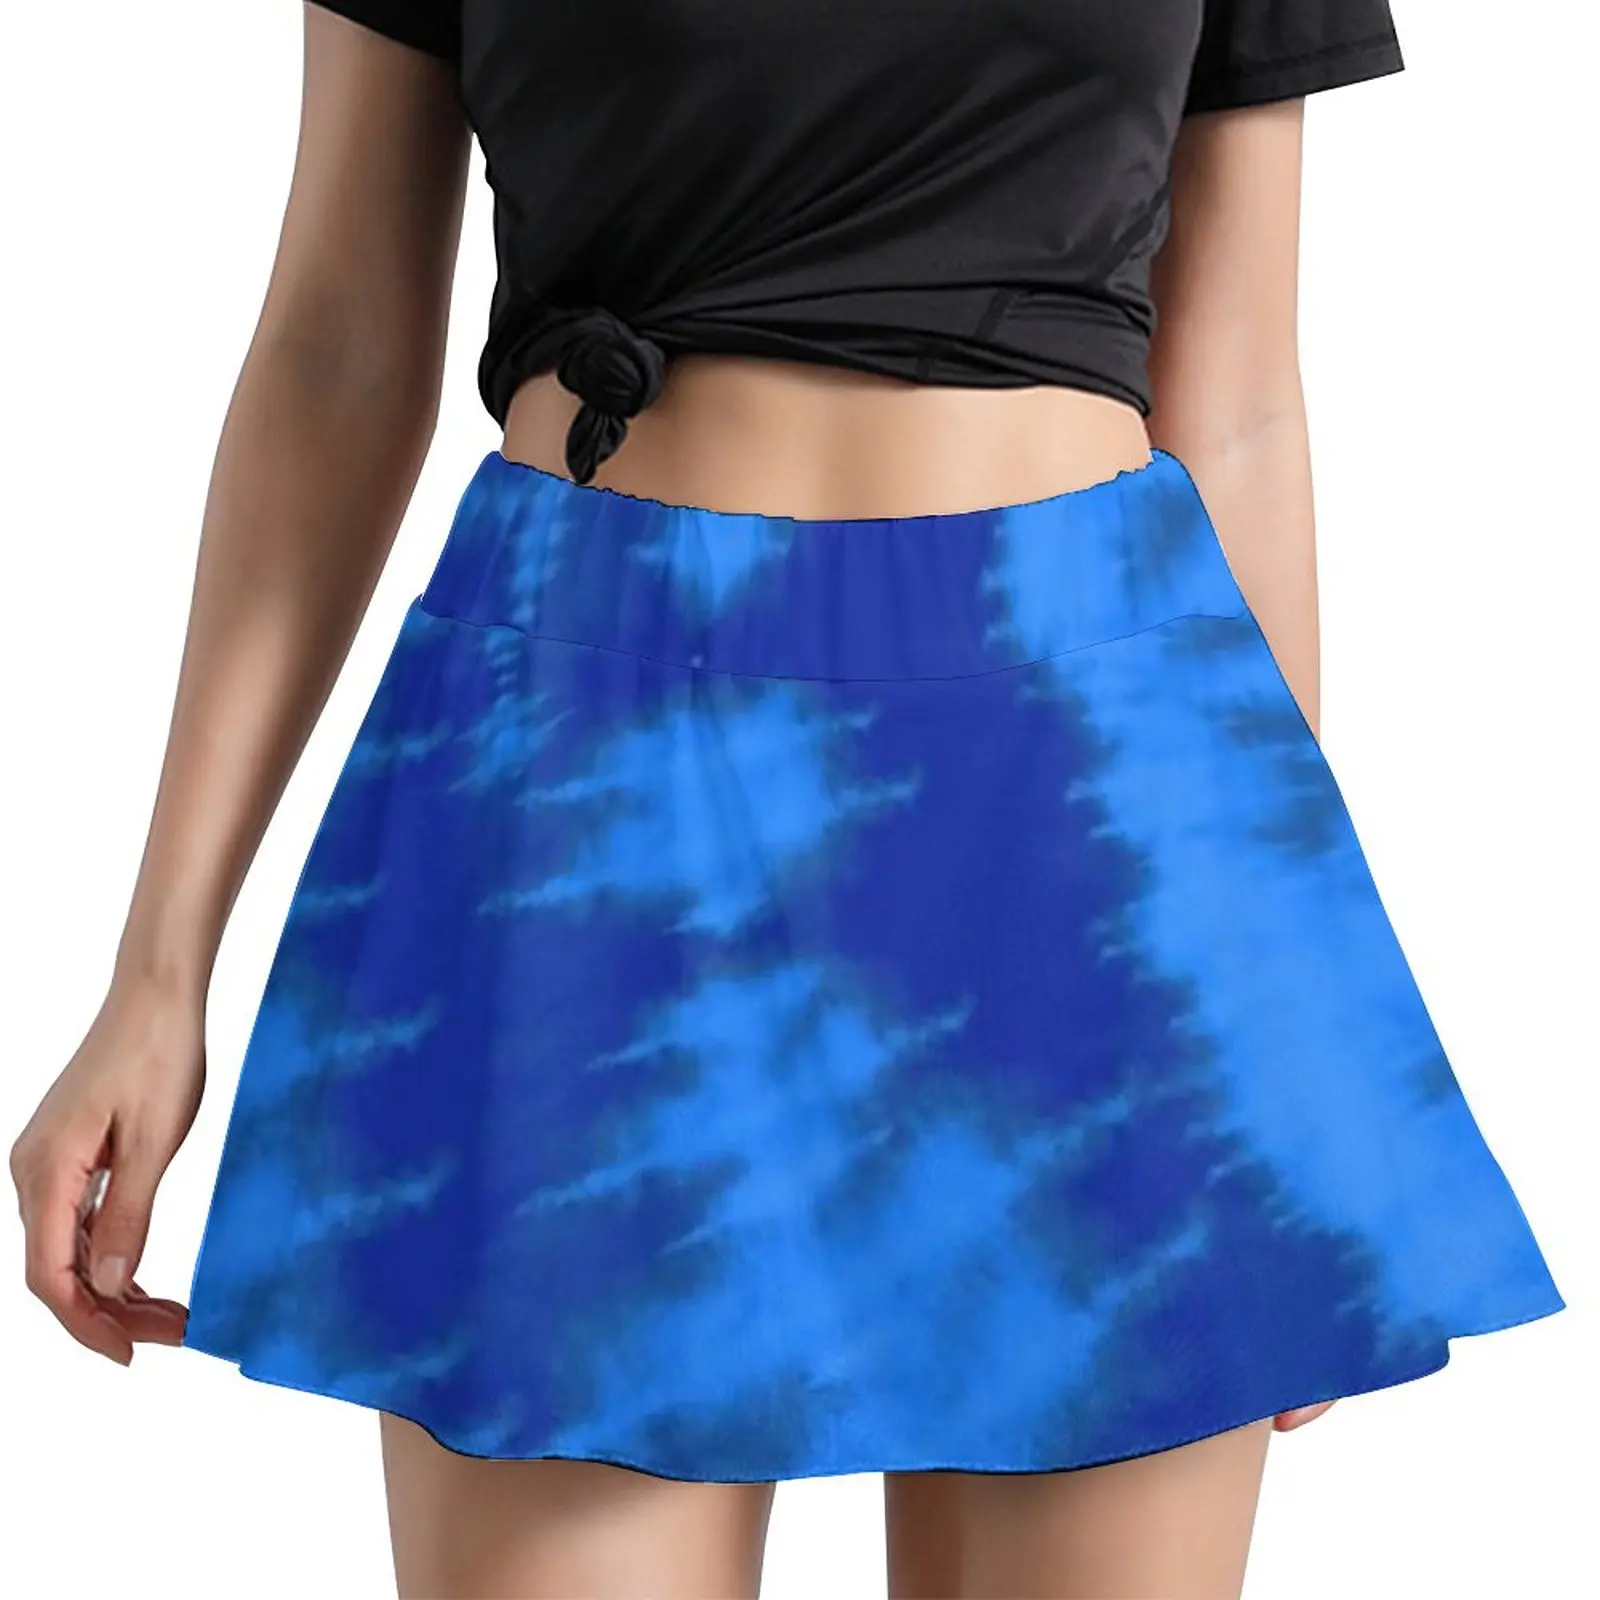 

Blue Swirl Tie Dye Skirt Midnight Blue Aqua Vintage Harajuku Casual A-line Skirts Cute Mini Skirt Print Oversized Skort Clothes